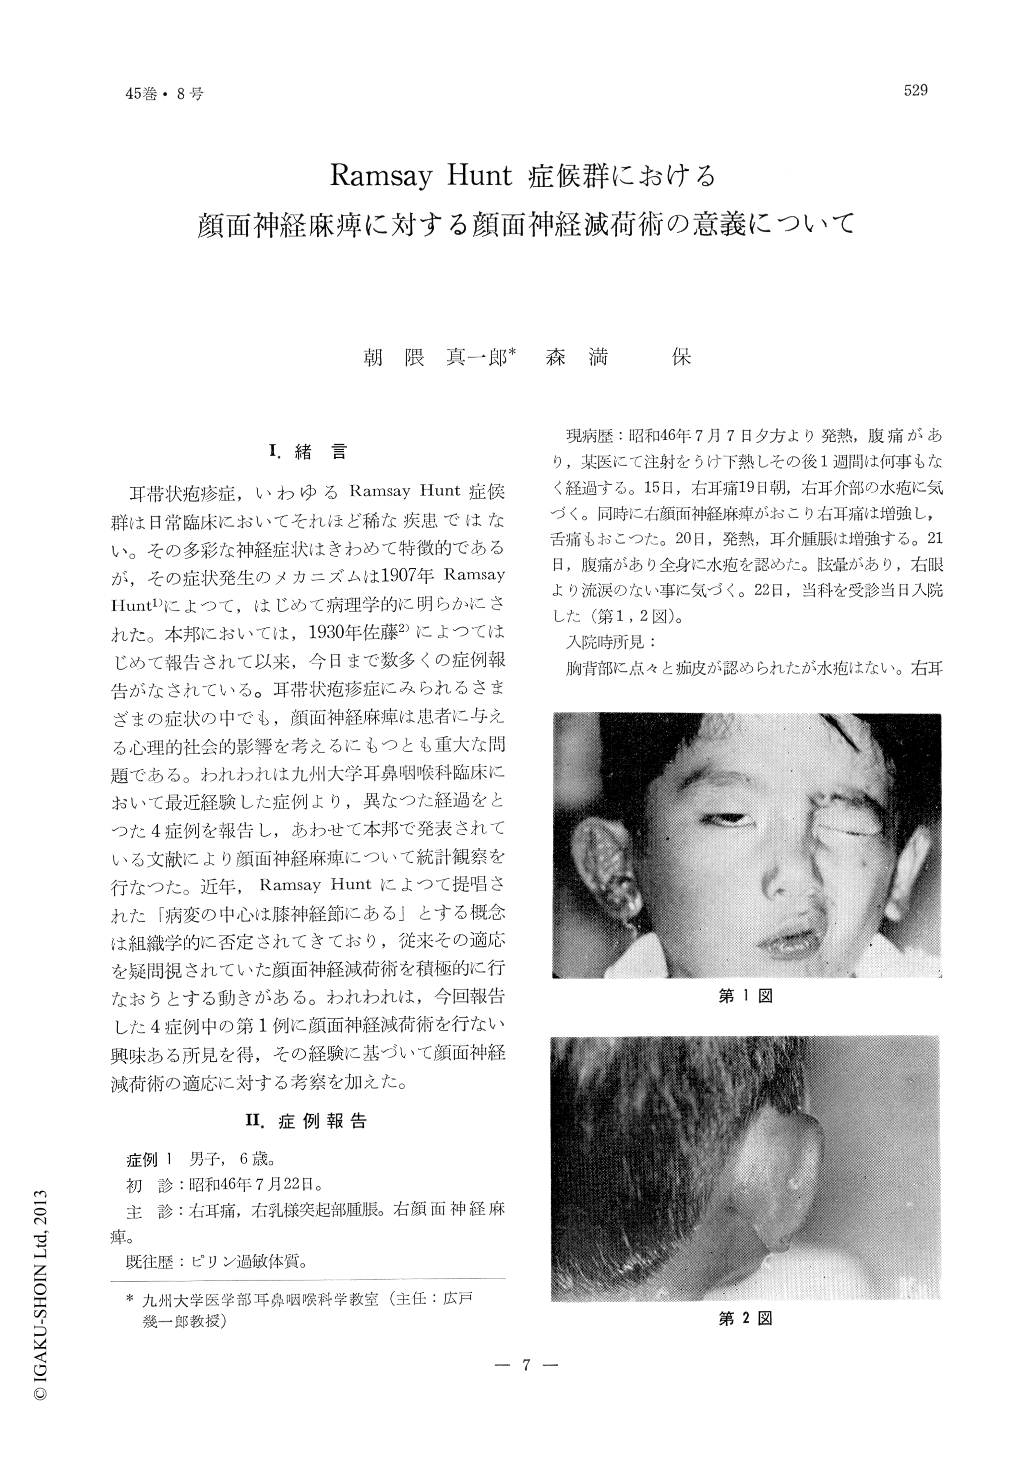 Ramsay Hunt症候群における顔面神経麻痺に対する顔面神経減荷術の意義 